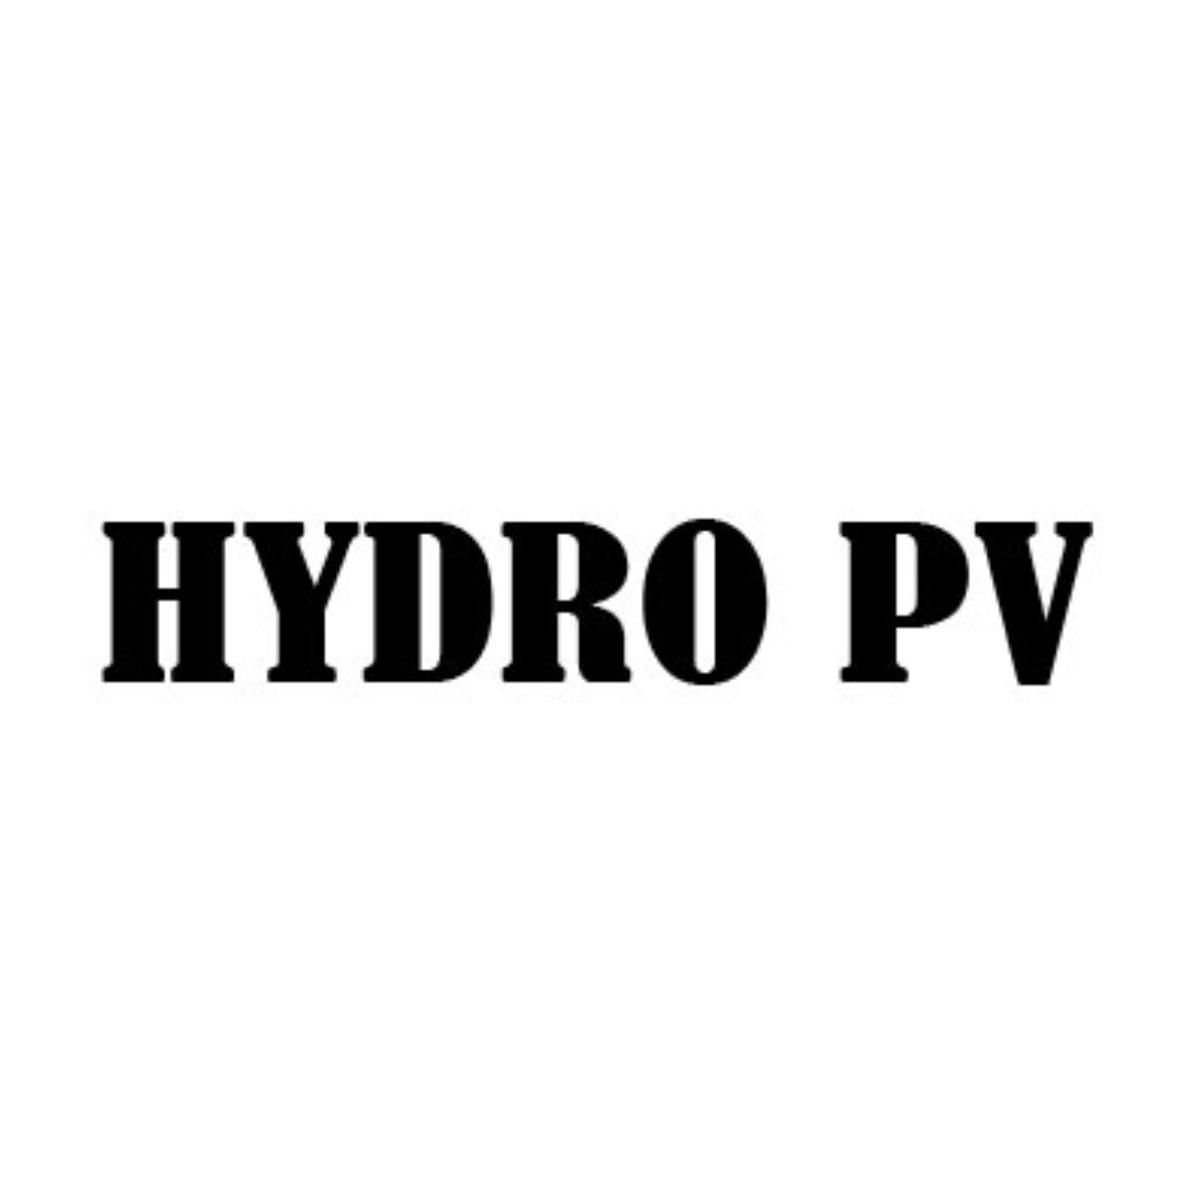 Hydro pv